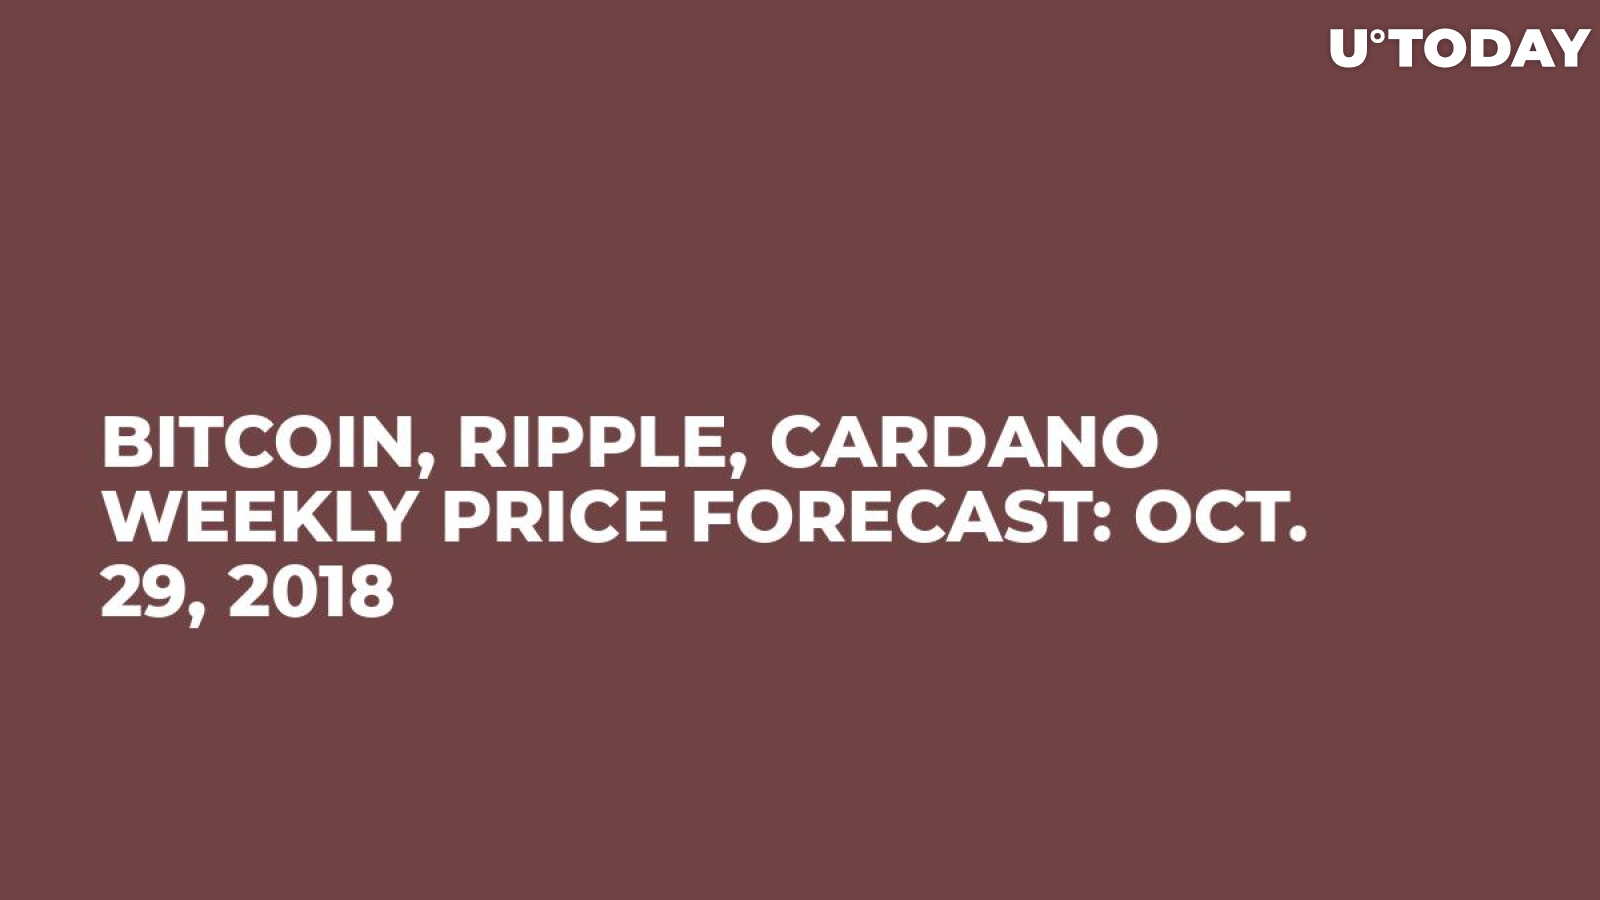 Bitcoin, Ripple, Cardano Weekly Price Forecast: Oct. 29, 2018